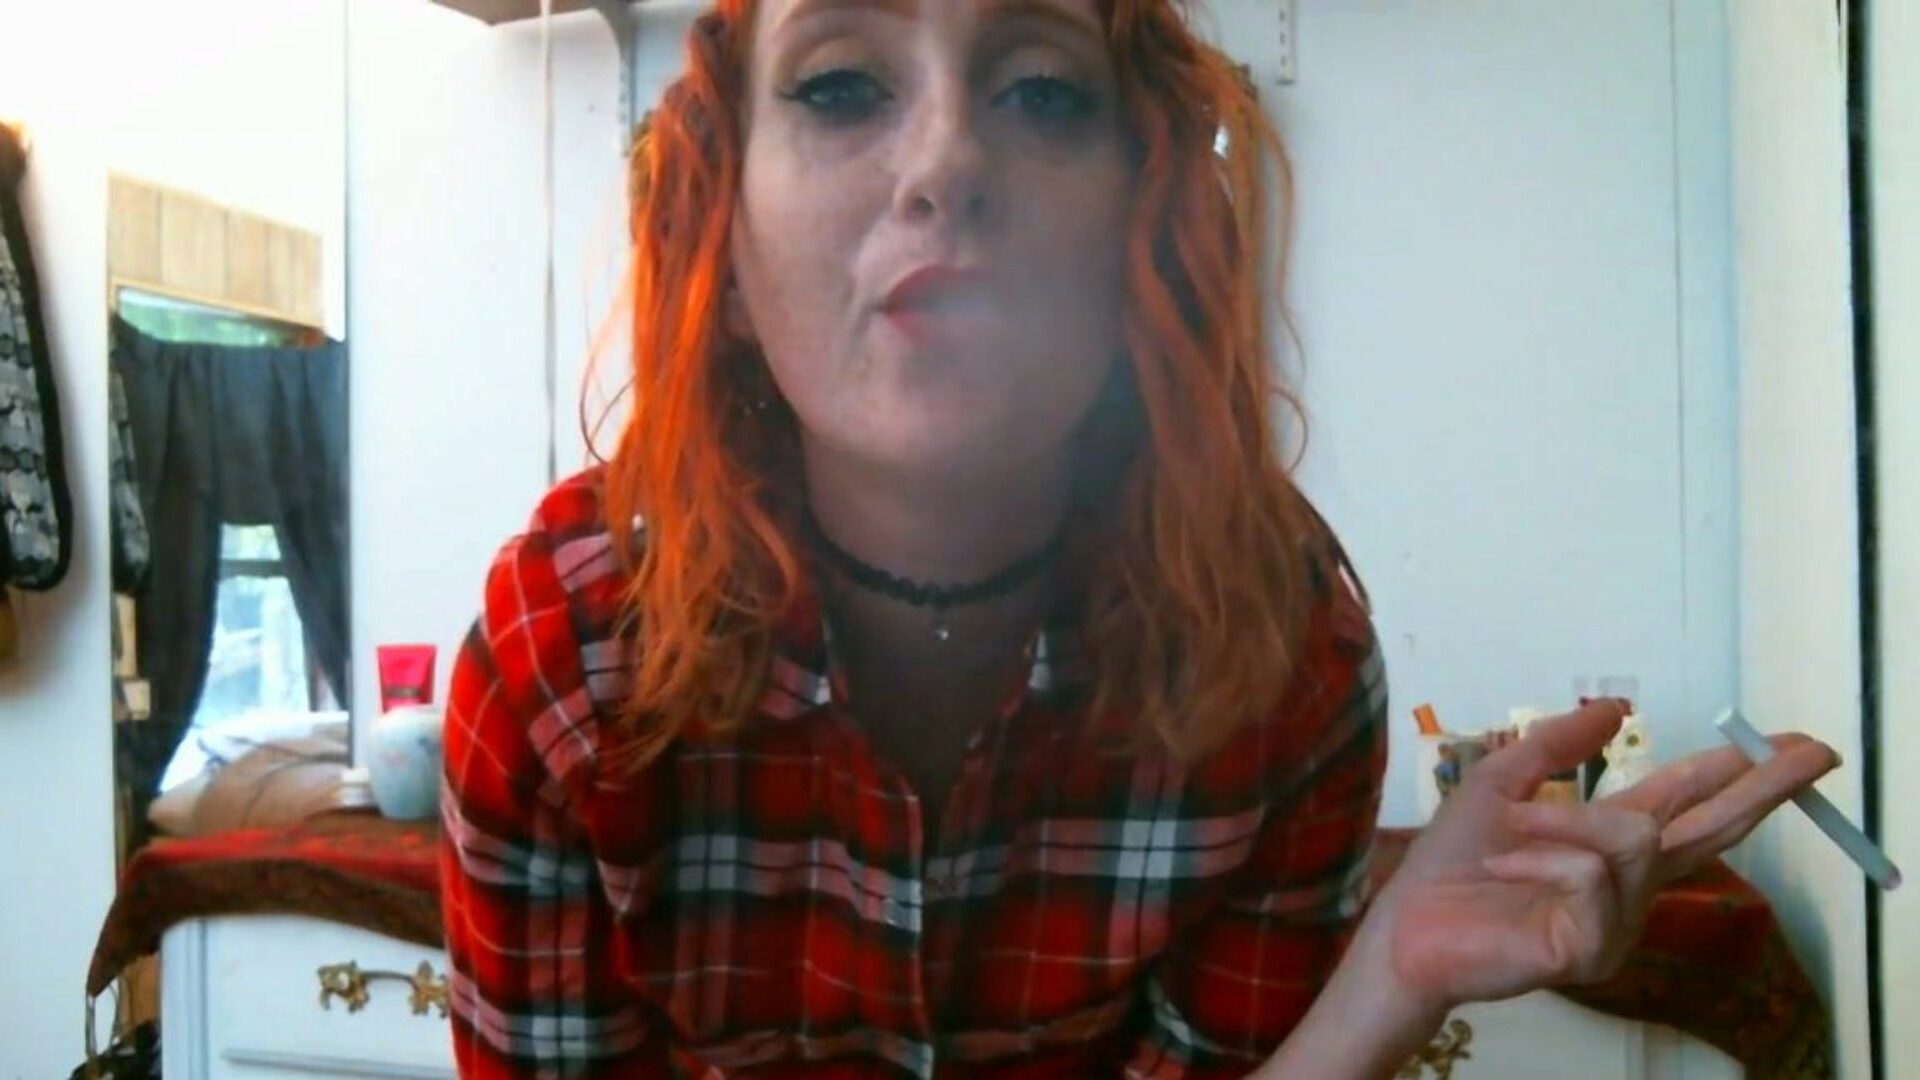 smoky tease: κάπνισμα φετίχ hd πορνό βίντεο e8 - xhamster παρακολουθήστε smoky tease tube clip σεξ δωρεάν στο xhamster, με την ανυπόμονη συνείδηση ​​του καπνίσματος φετίχ αμερικάνικες & μικρές βυζιά σκηνές επεισοδίων πορνογραφίας hd